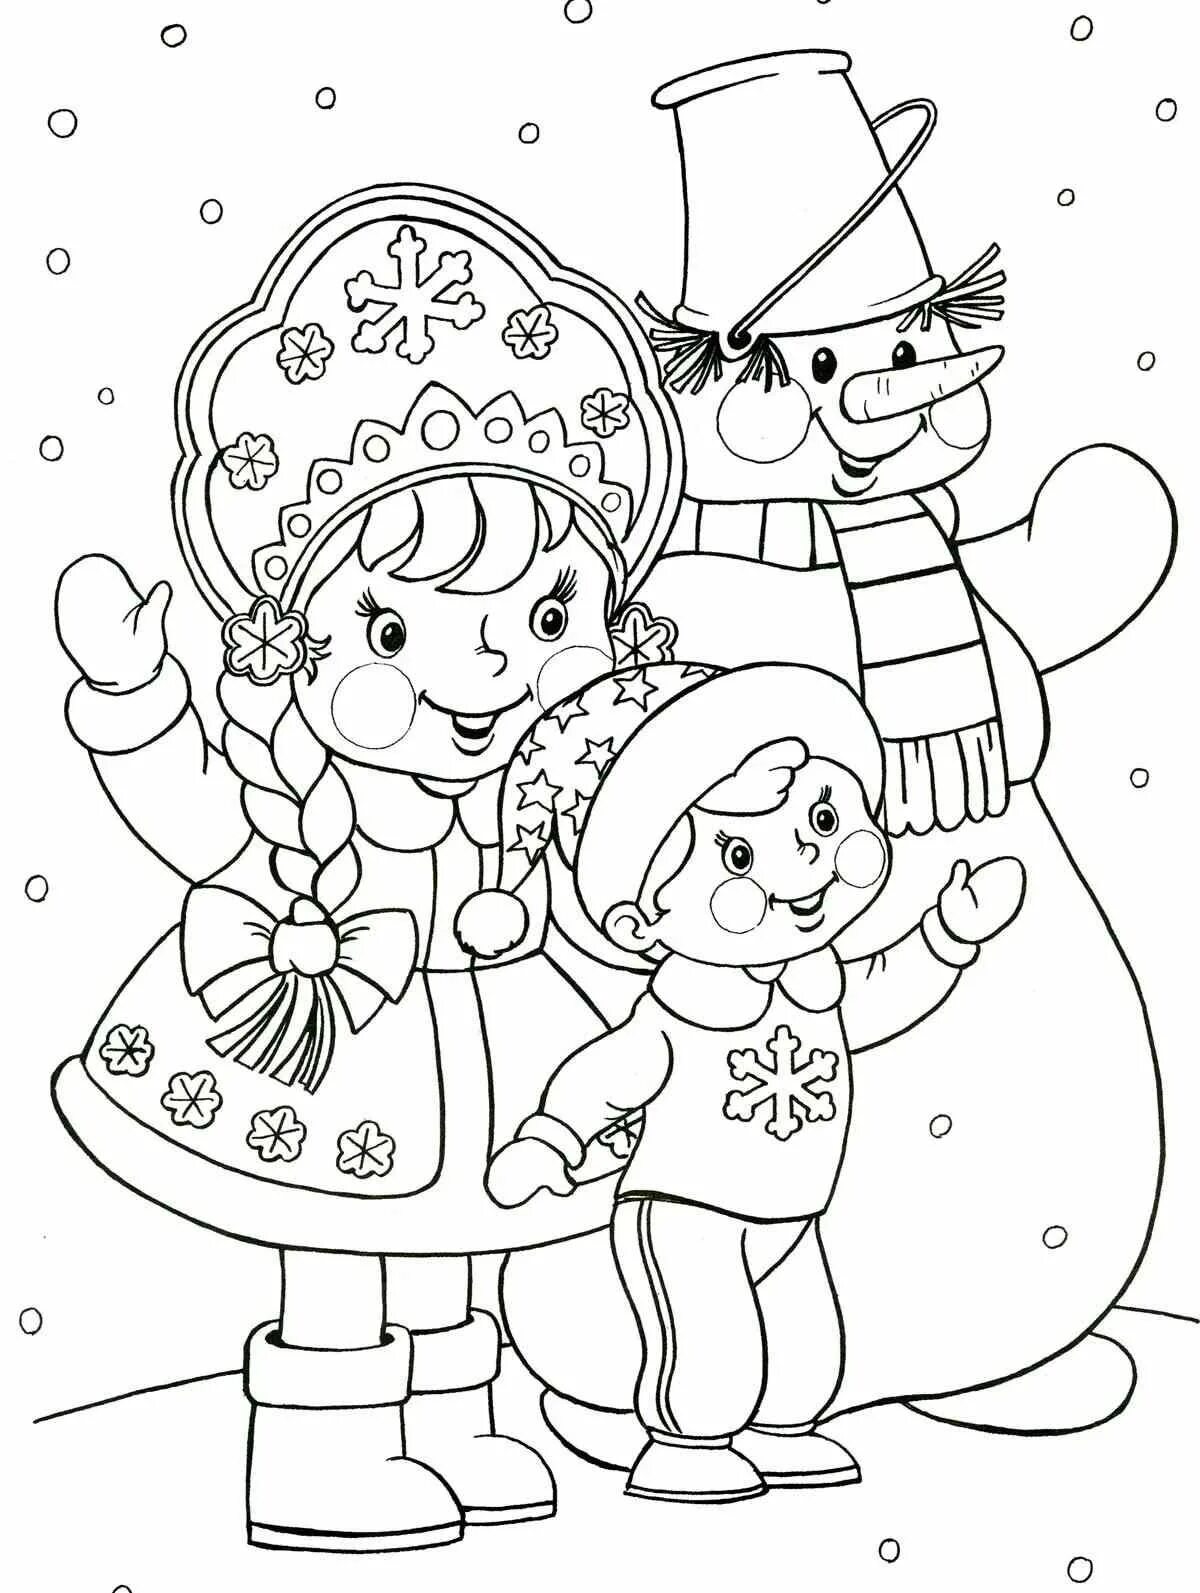 Children's Christmas drawing #1